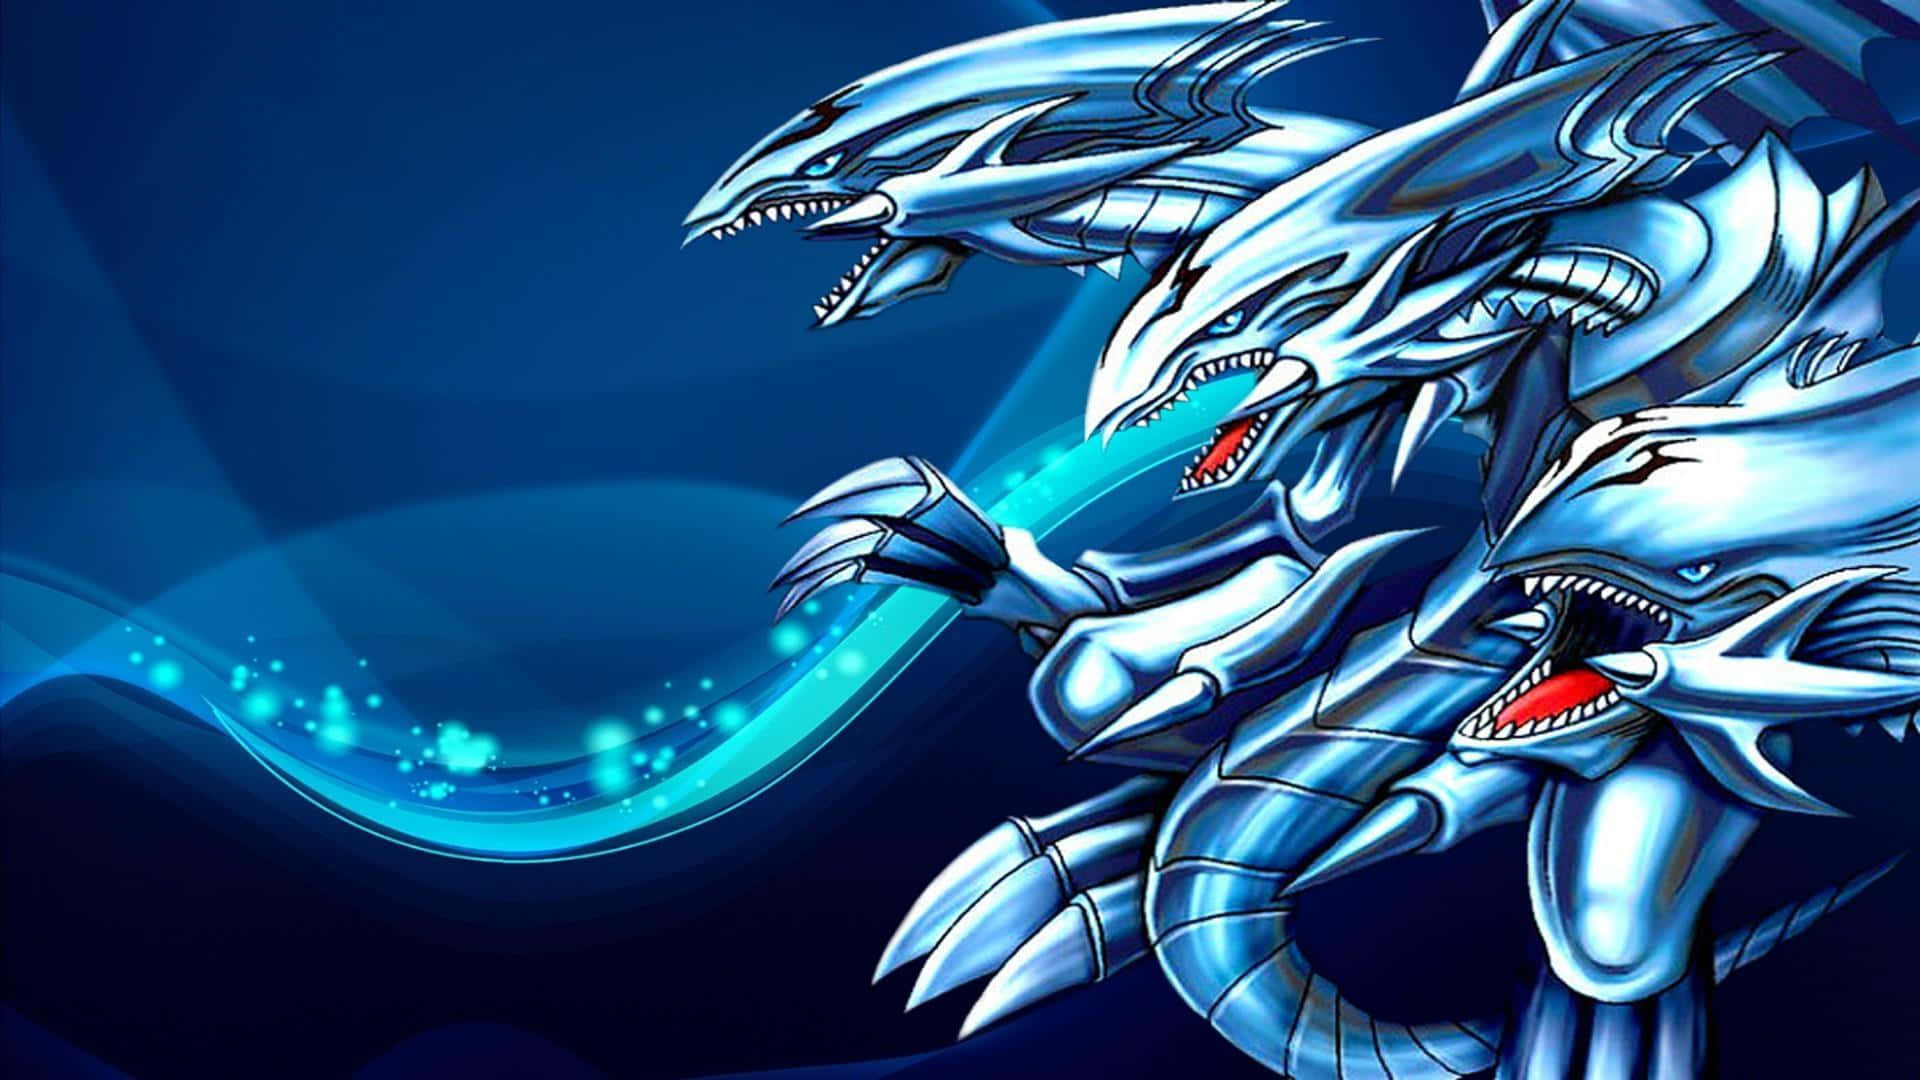 Fierce Yu-Gi-Oh! Dragons ready for an epic battle Wallpaper